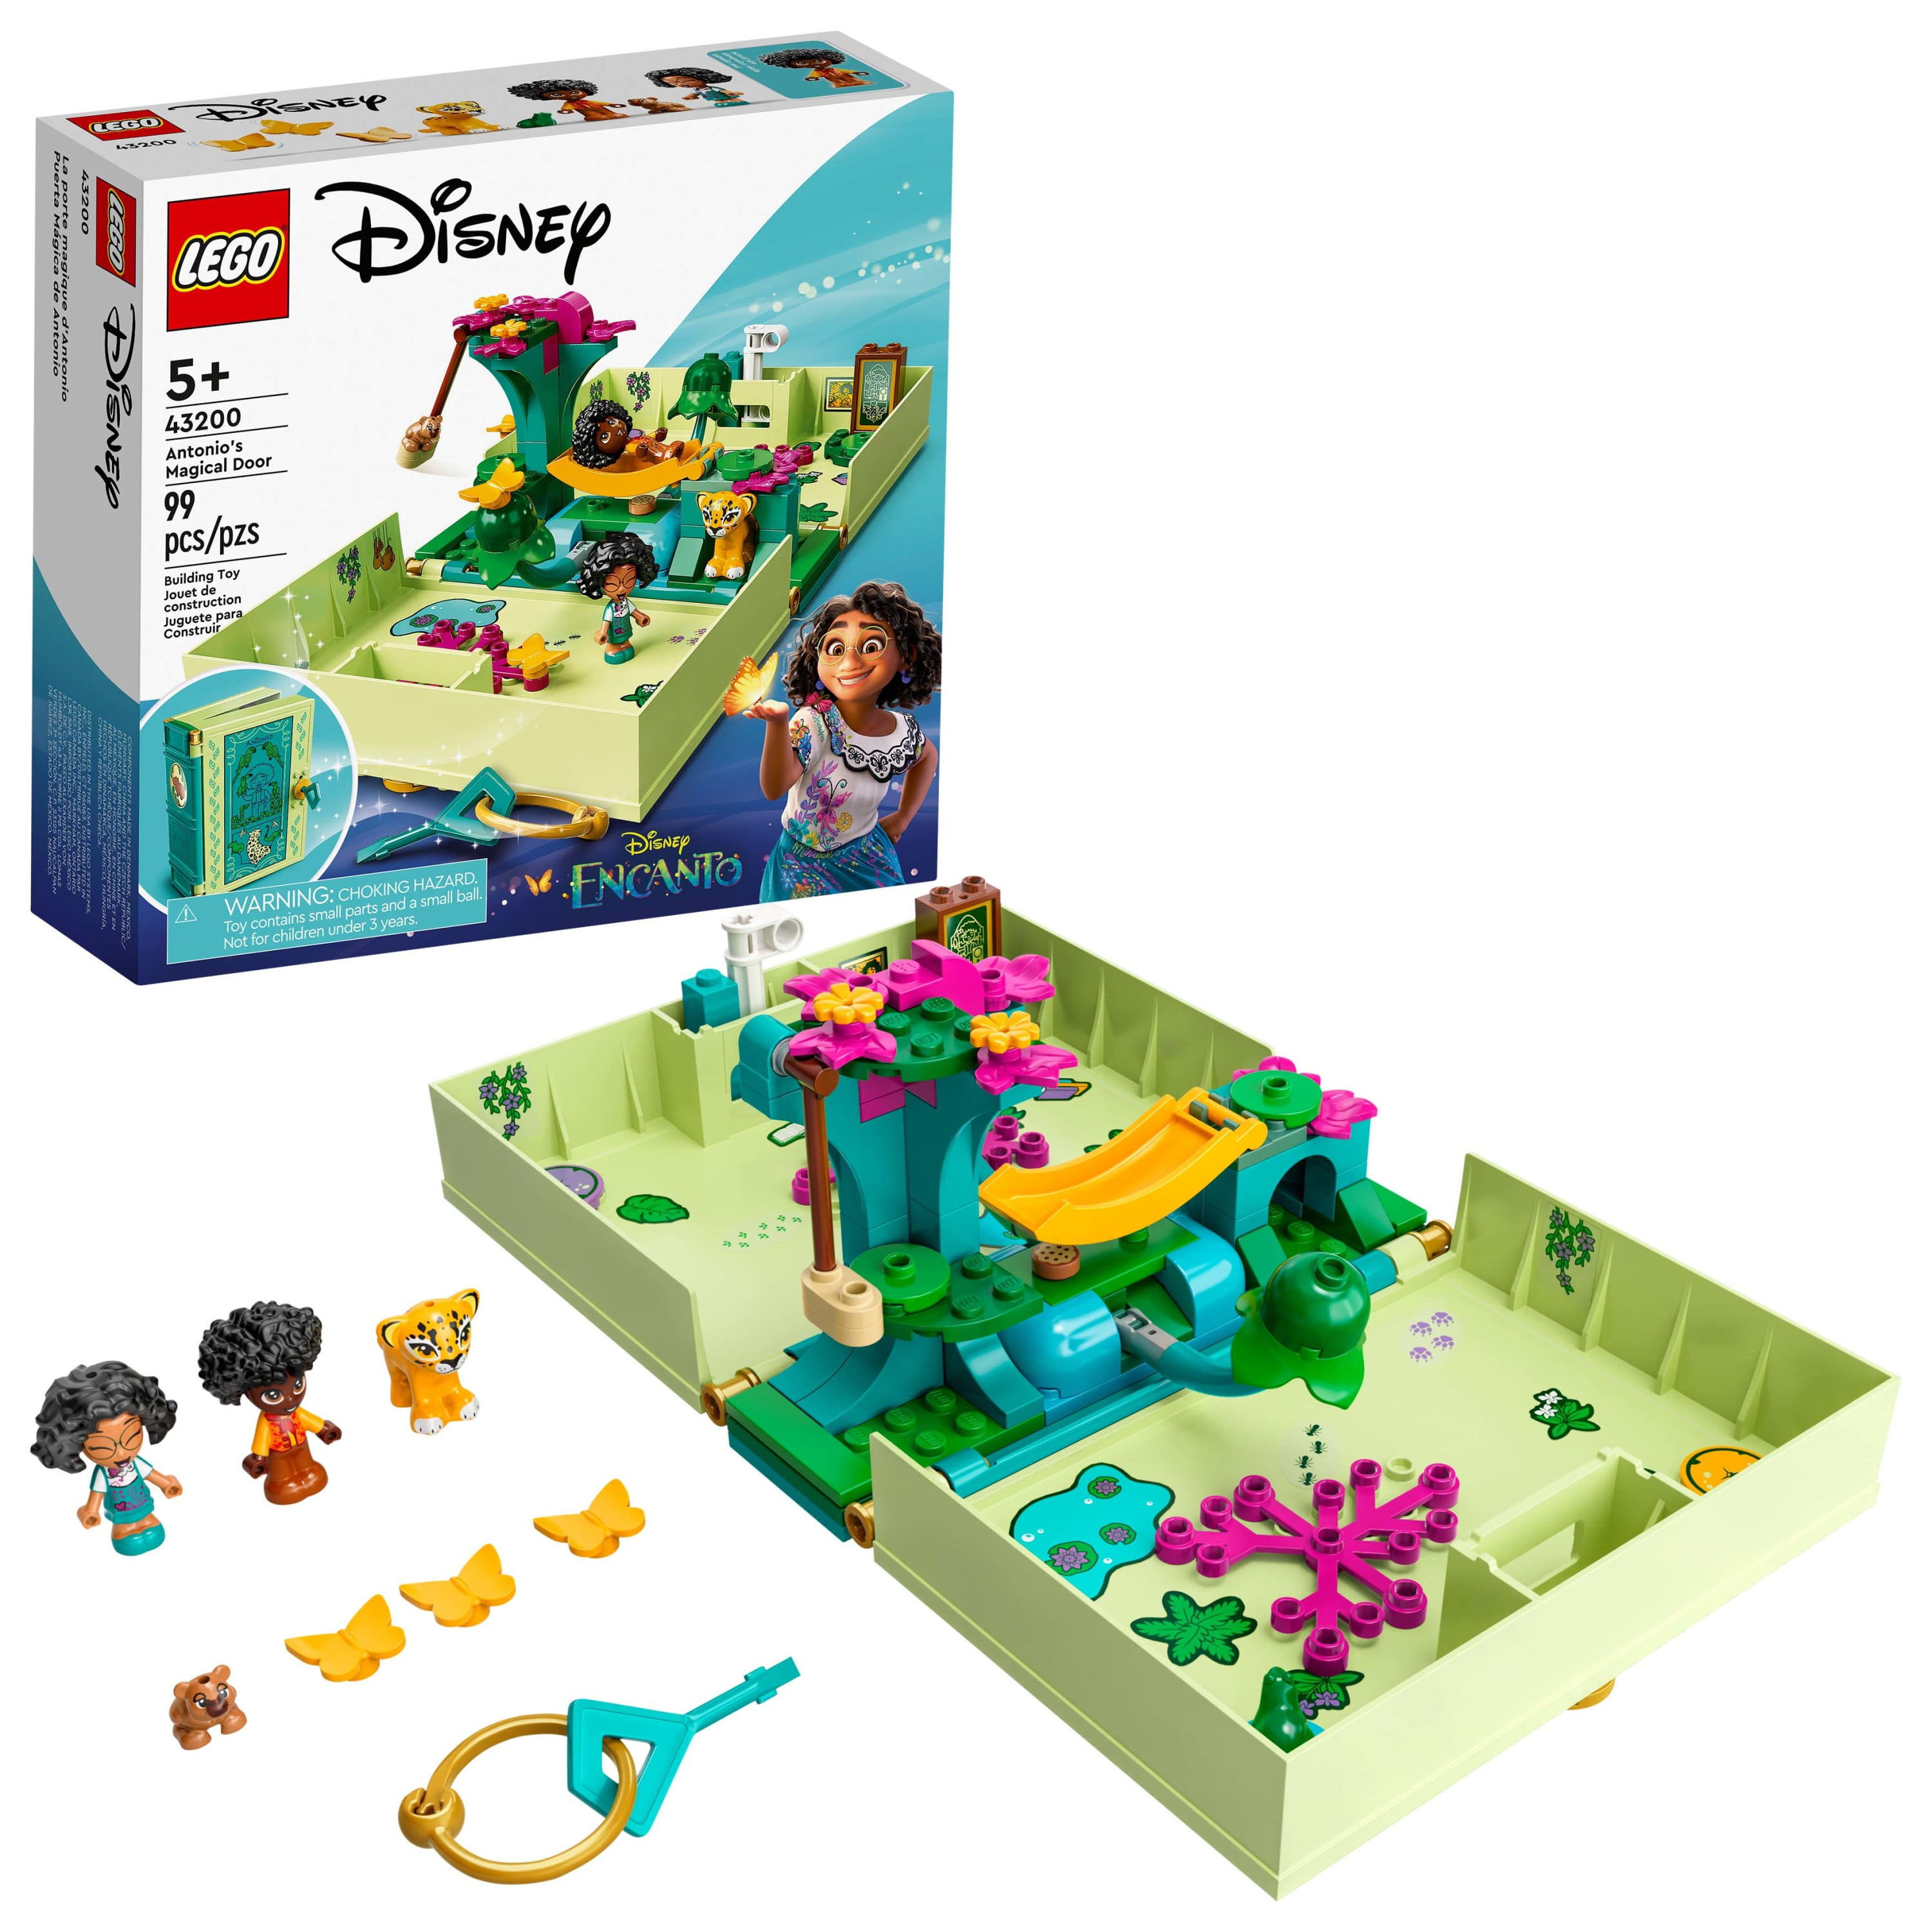 LEGO Disney Encanto Antonios Magical Door 43200 Building Kit; A Great Construction Toy for Kids Imaginations (99 pieces)